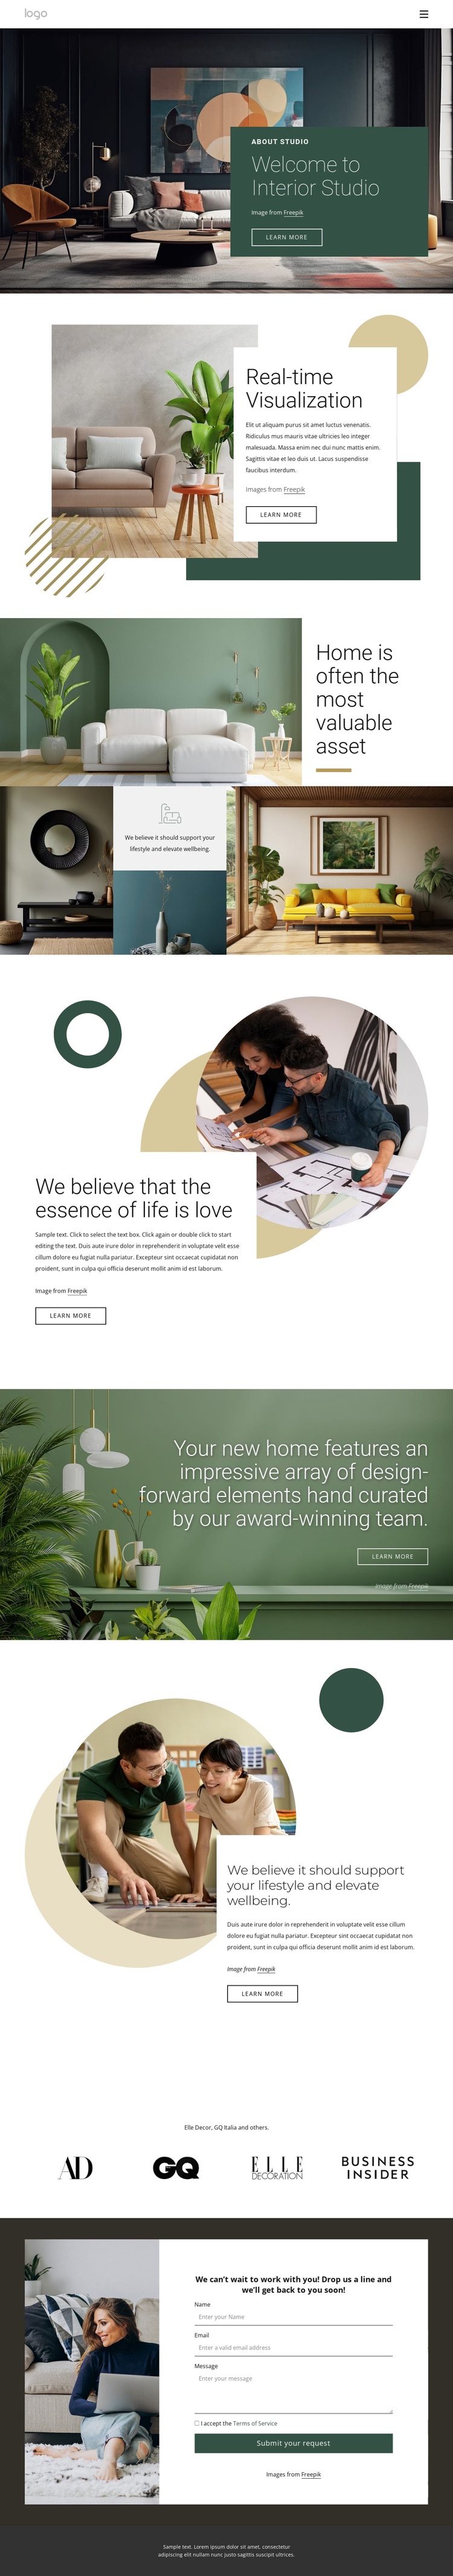 Award-winning interior design studio Joomla Page Builder